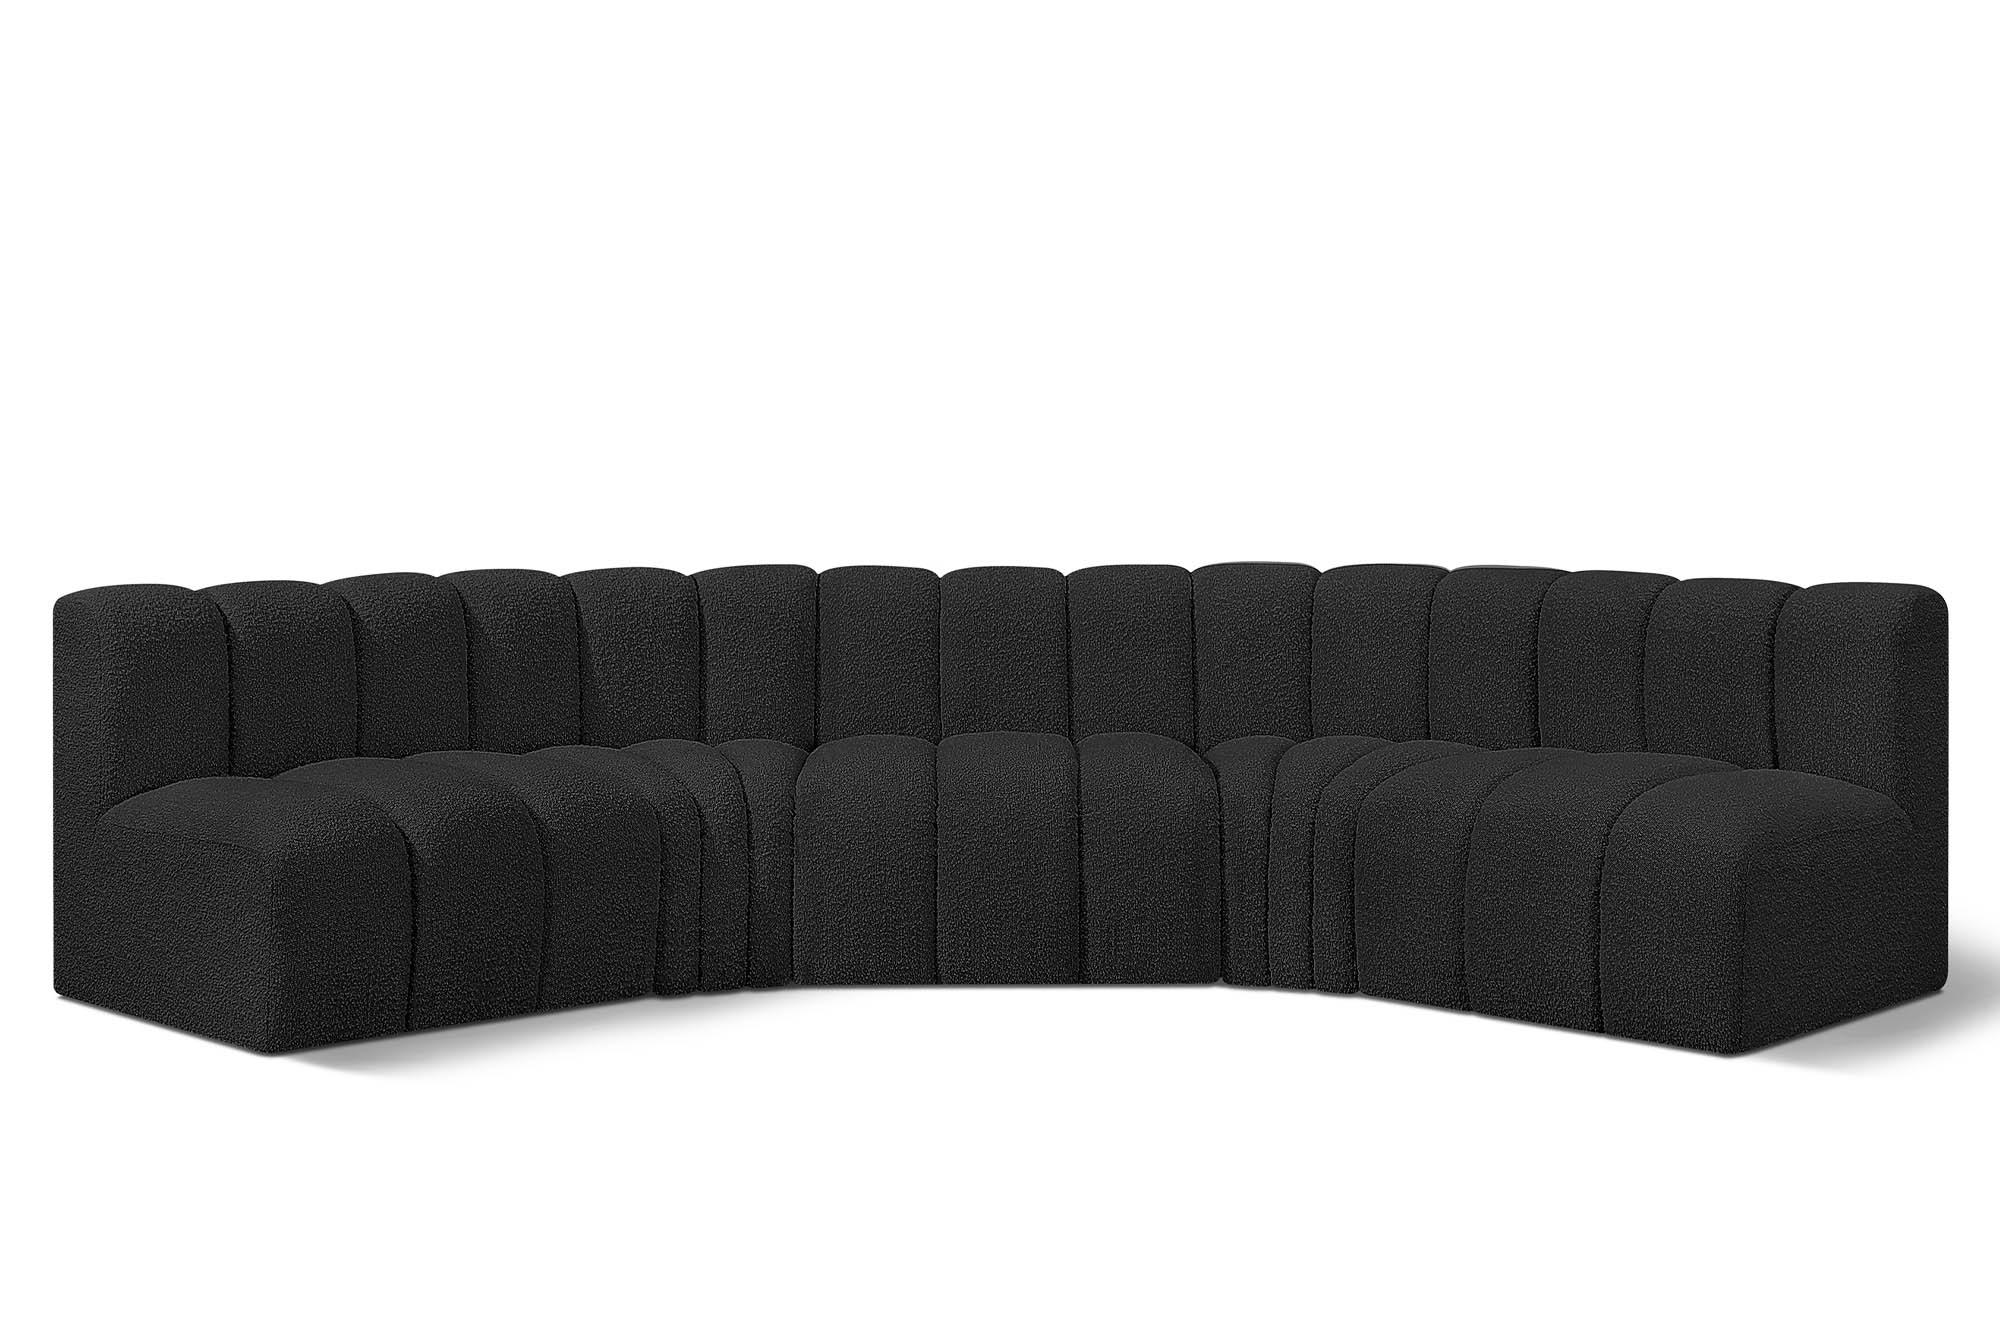 Contemporary, Modern Modular Sectional Sofa ARC 102Black-S5A 102Black-S5A in Black 